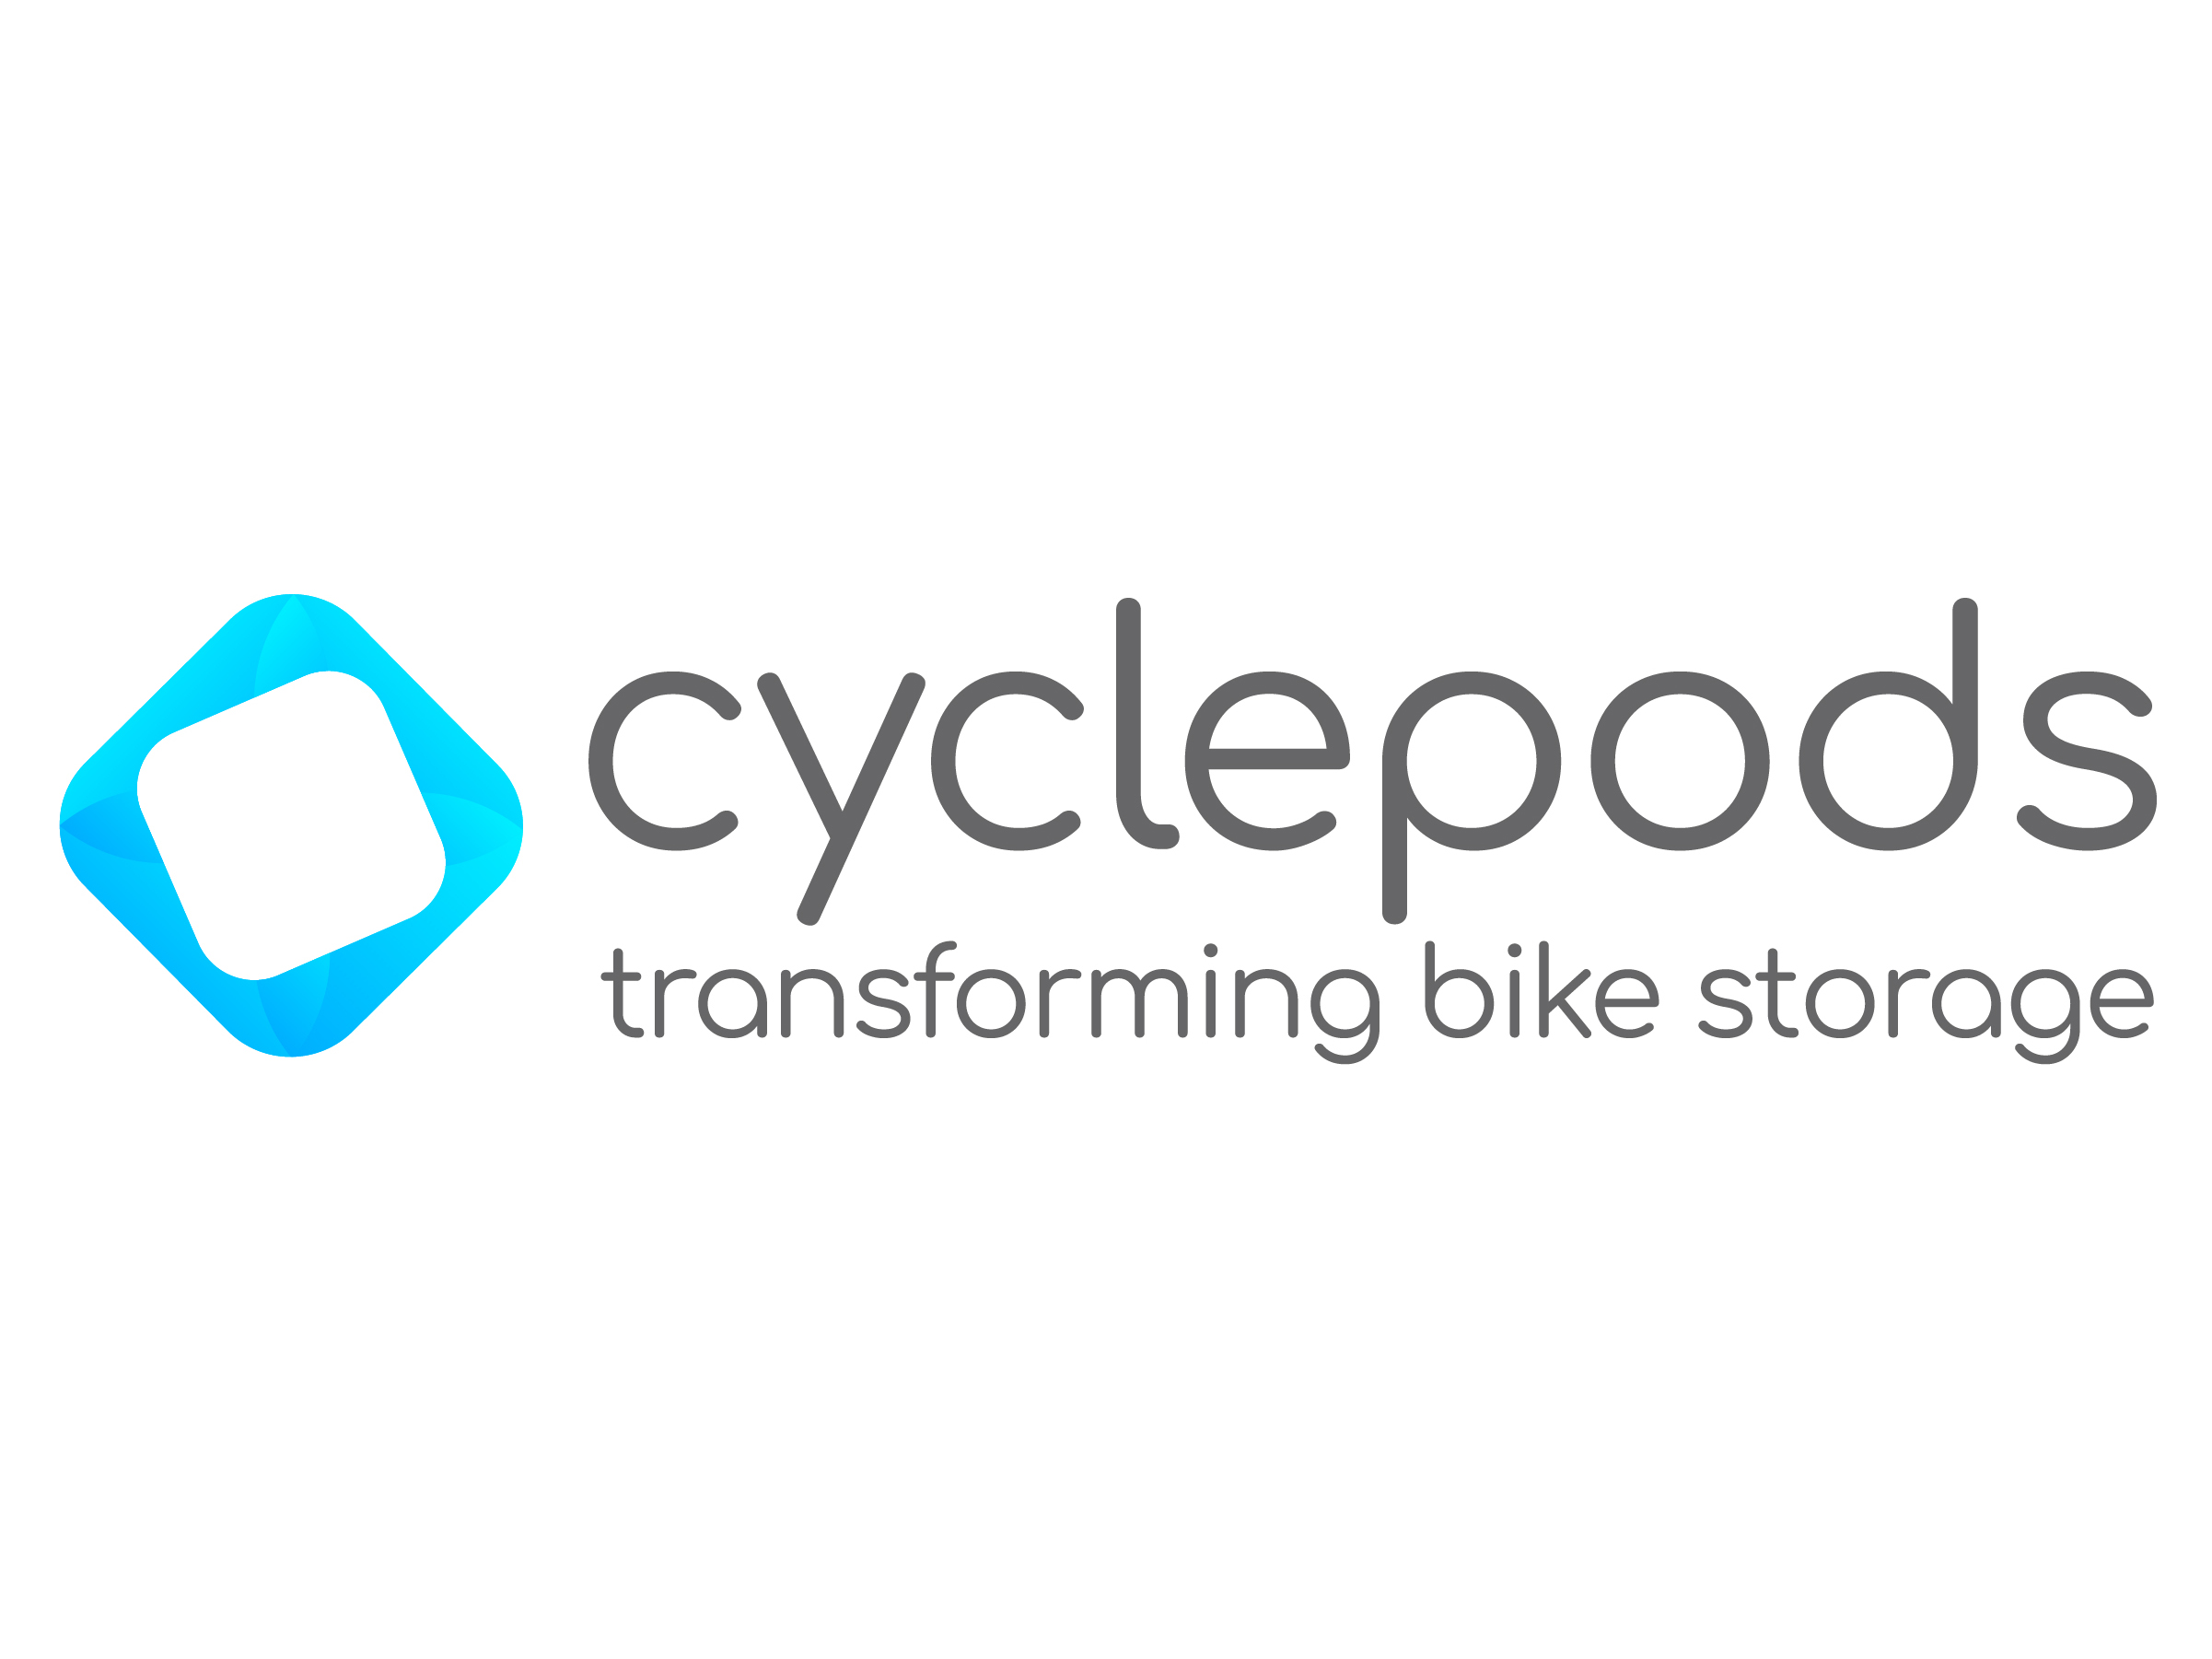 Cyclepods Ltd